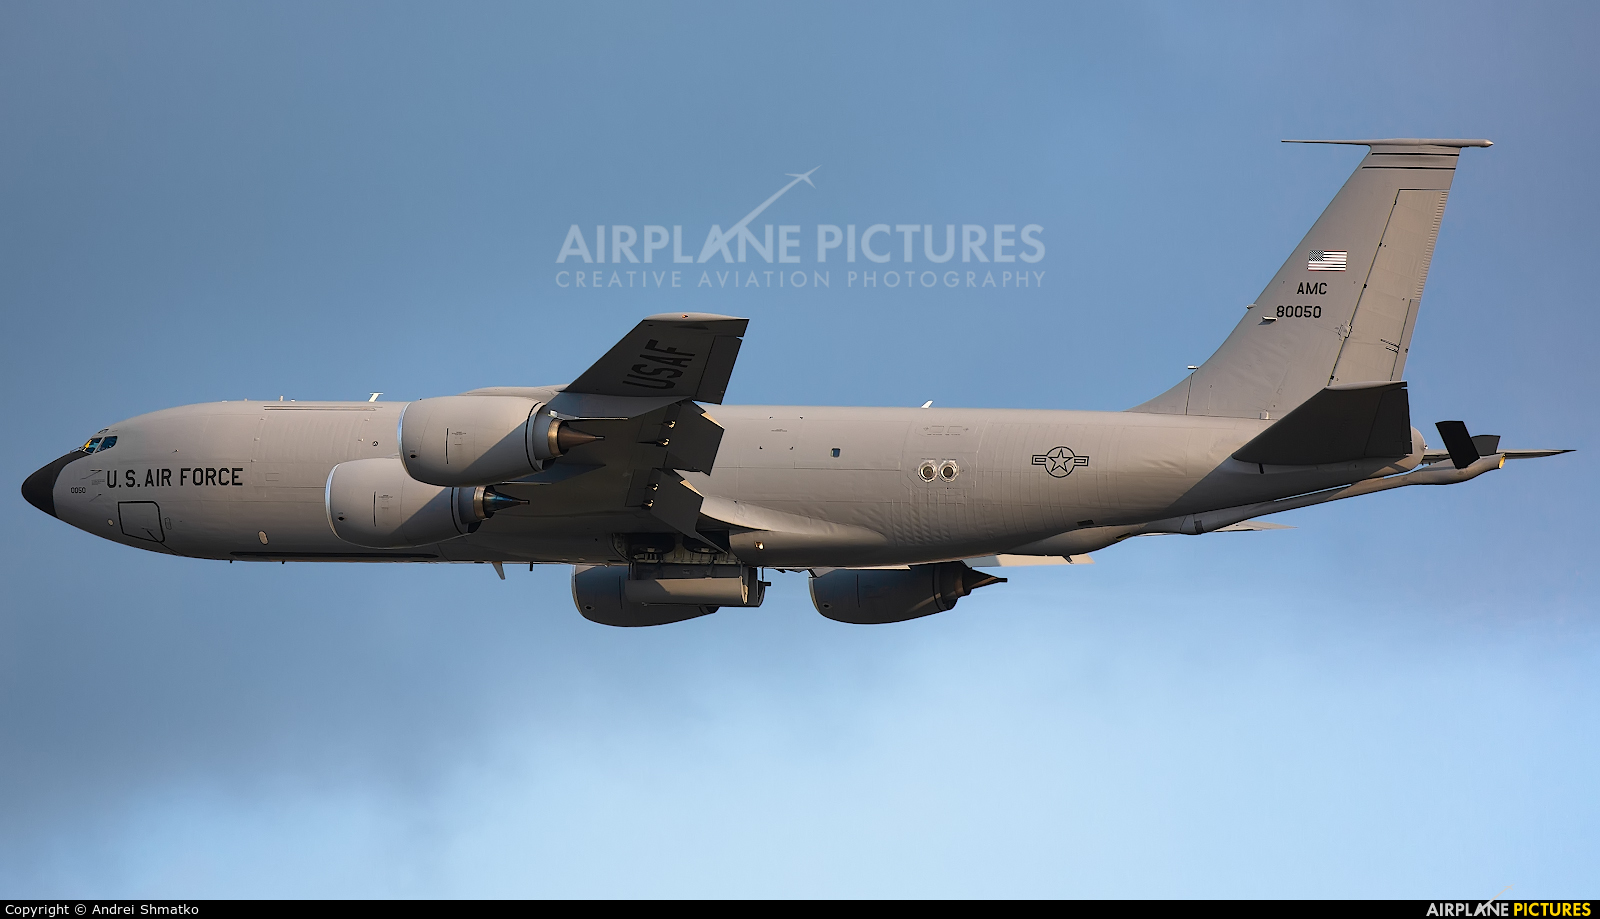 USA - Air Force 58-0050 aircraft at Kadena AB